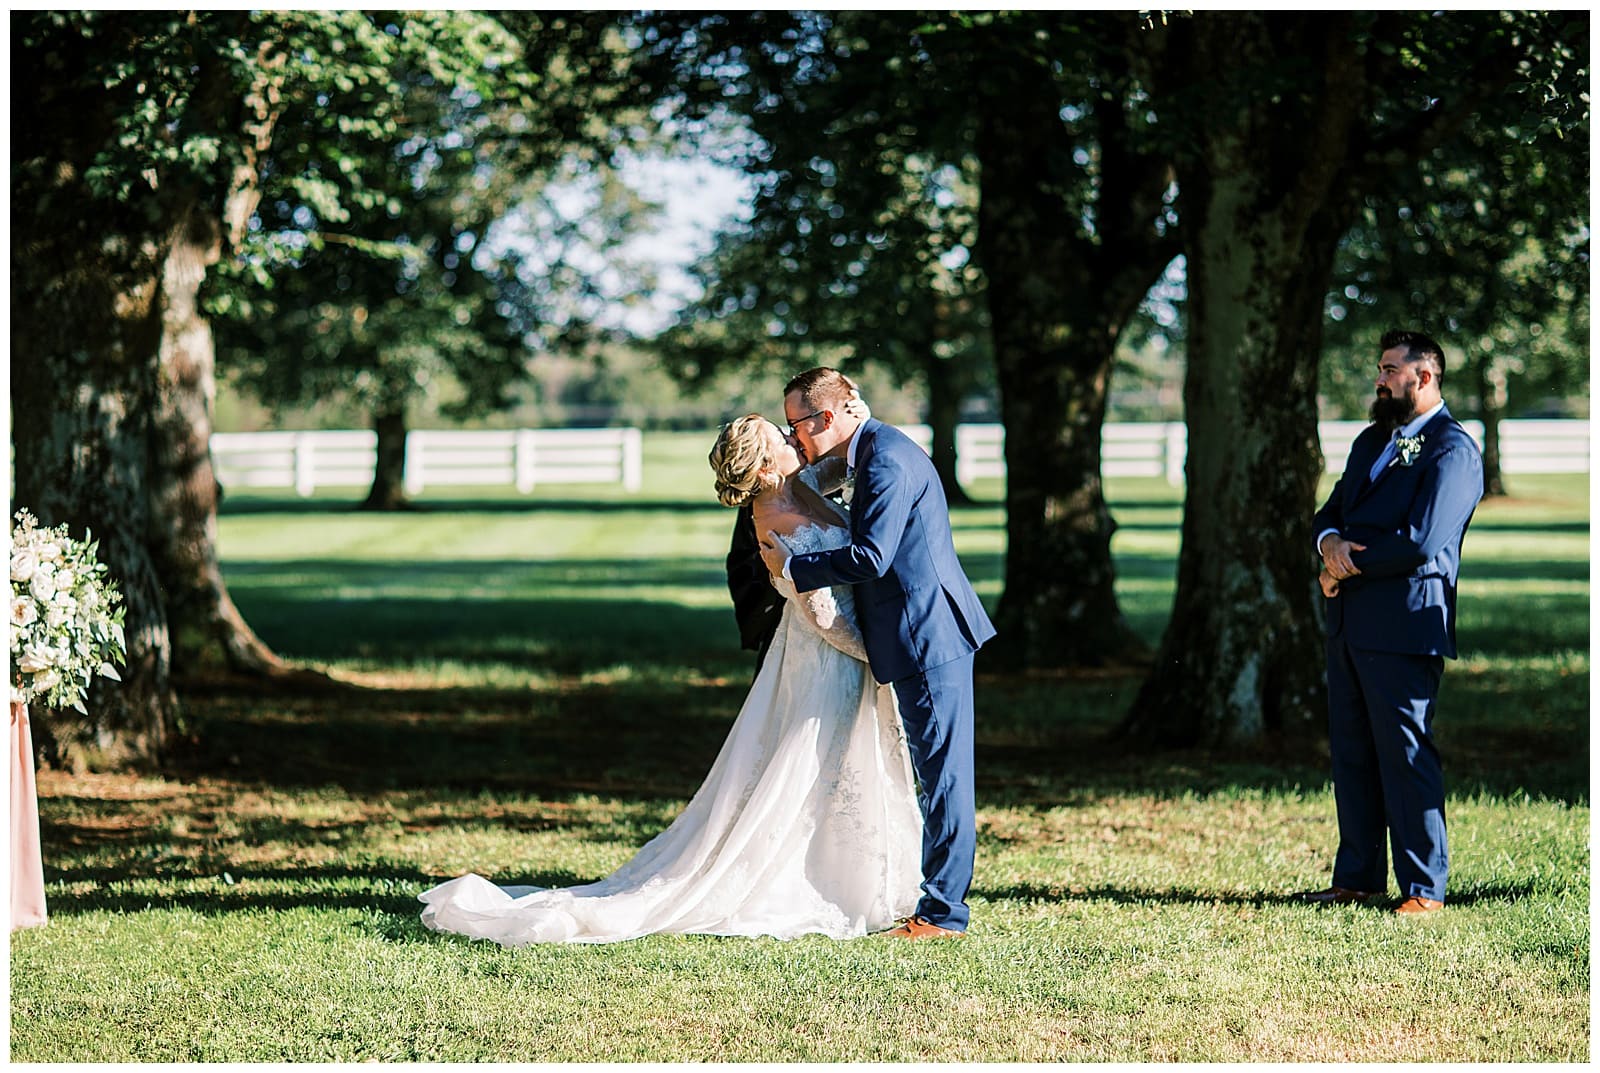 Danielle-Defayette-Photography-Castle-Hill-Cider-Charlottesville-Wedding-2020_0028.jpg